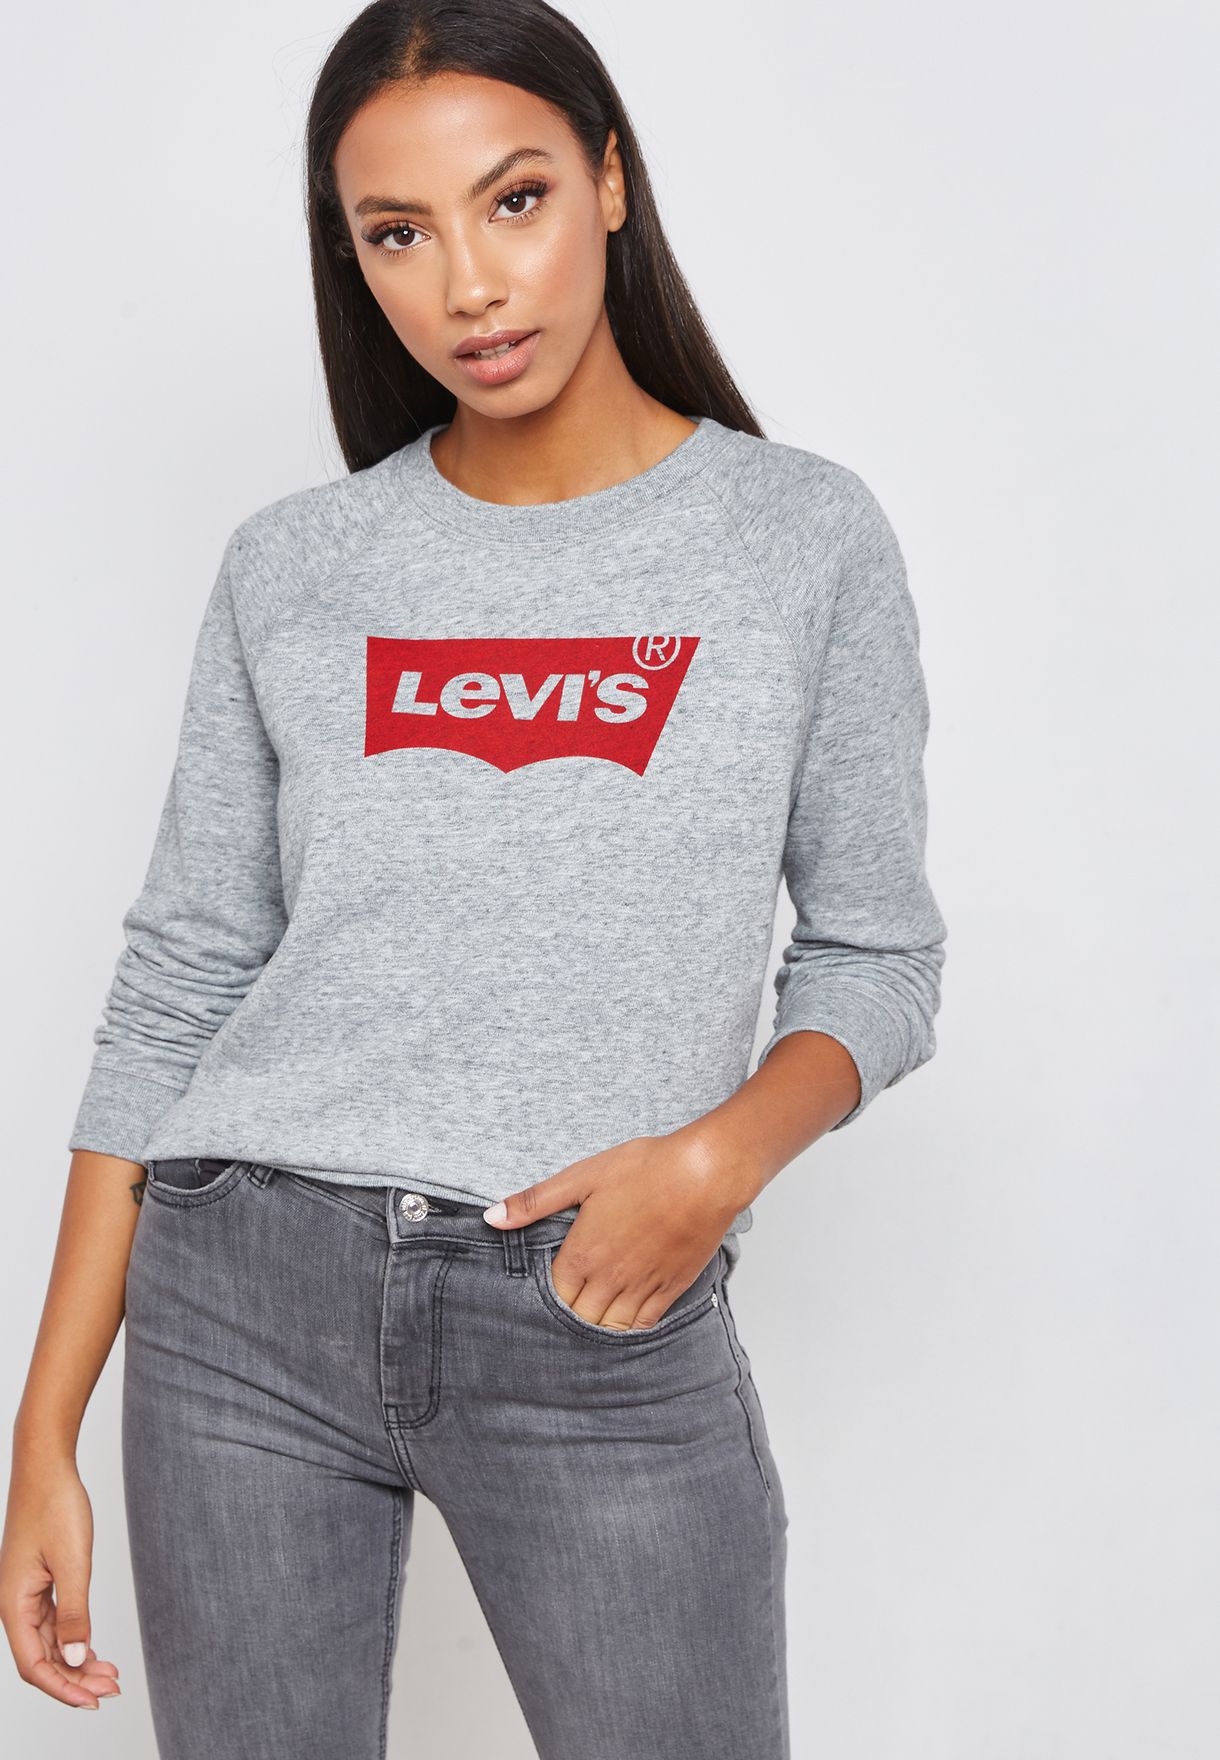 levi's grey hoodie womens